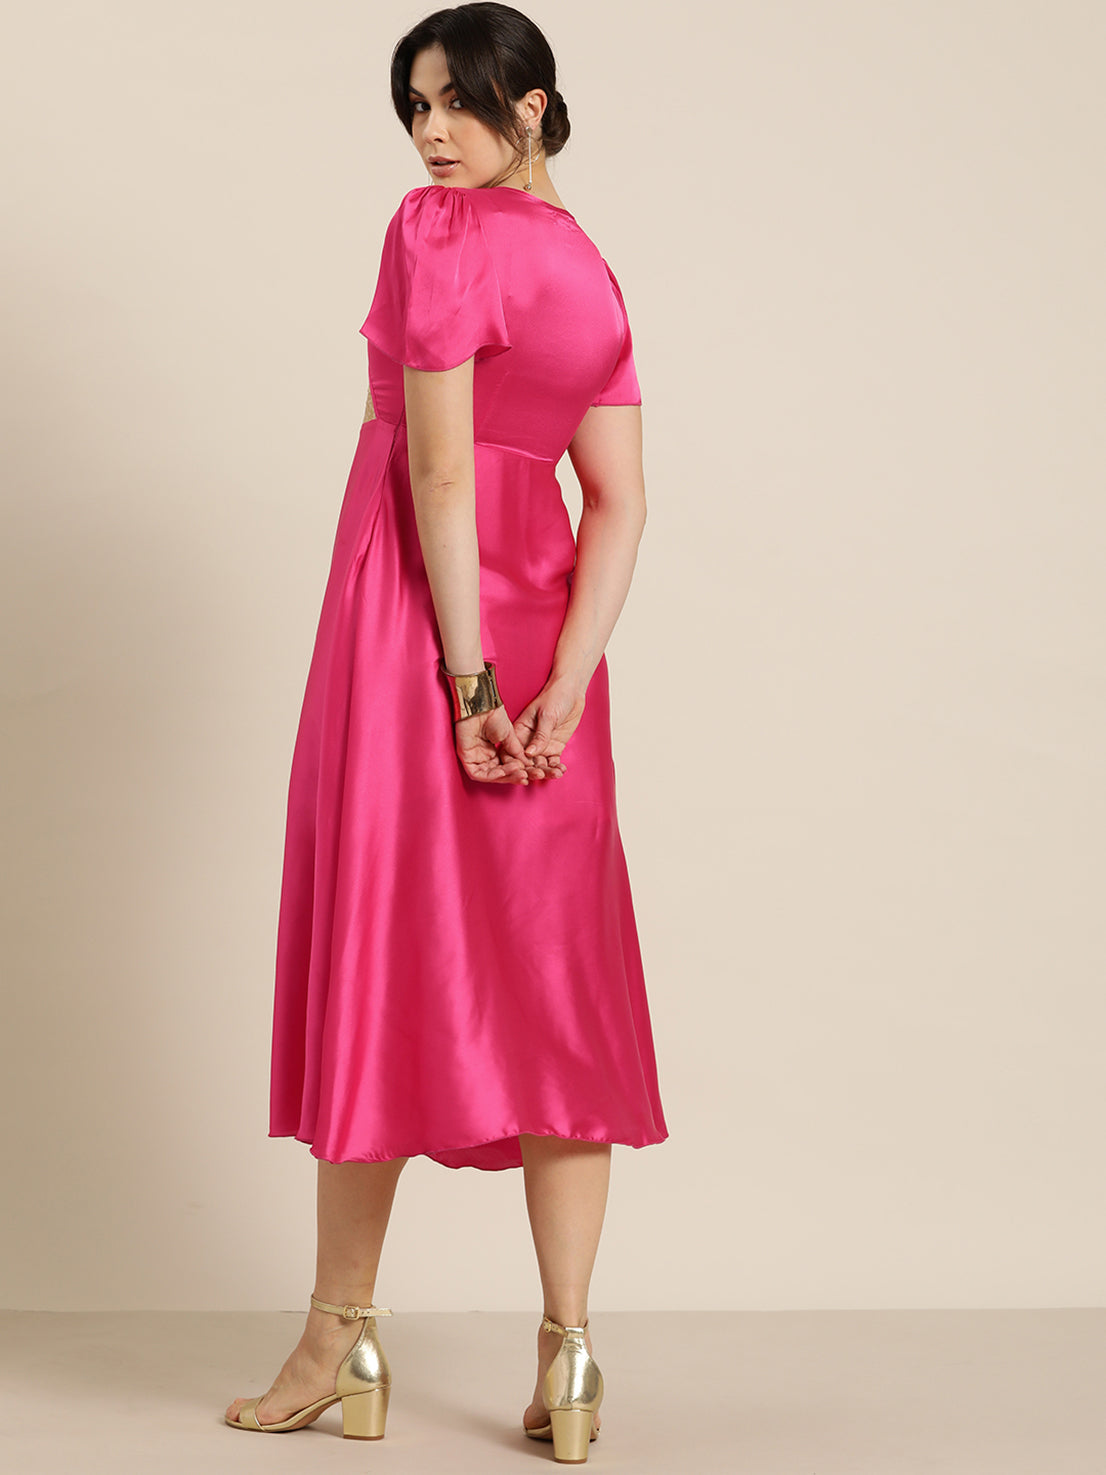 Hot pink brocade yoke party dress